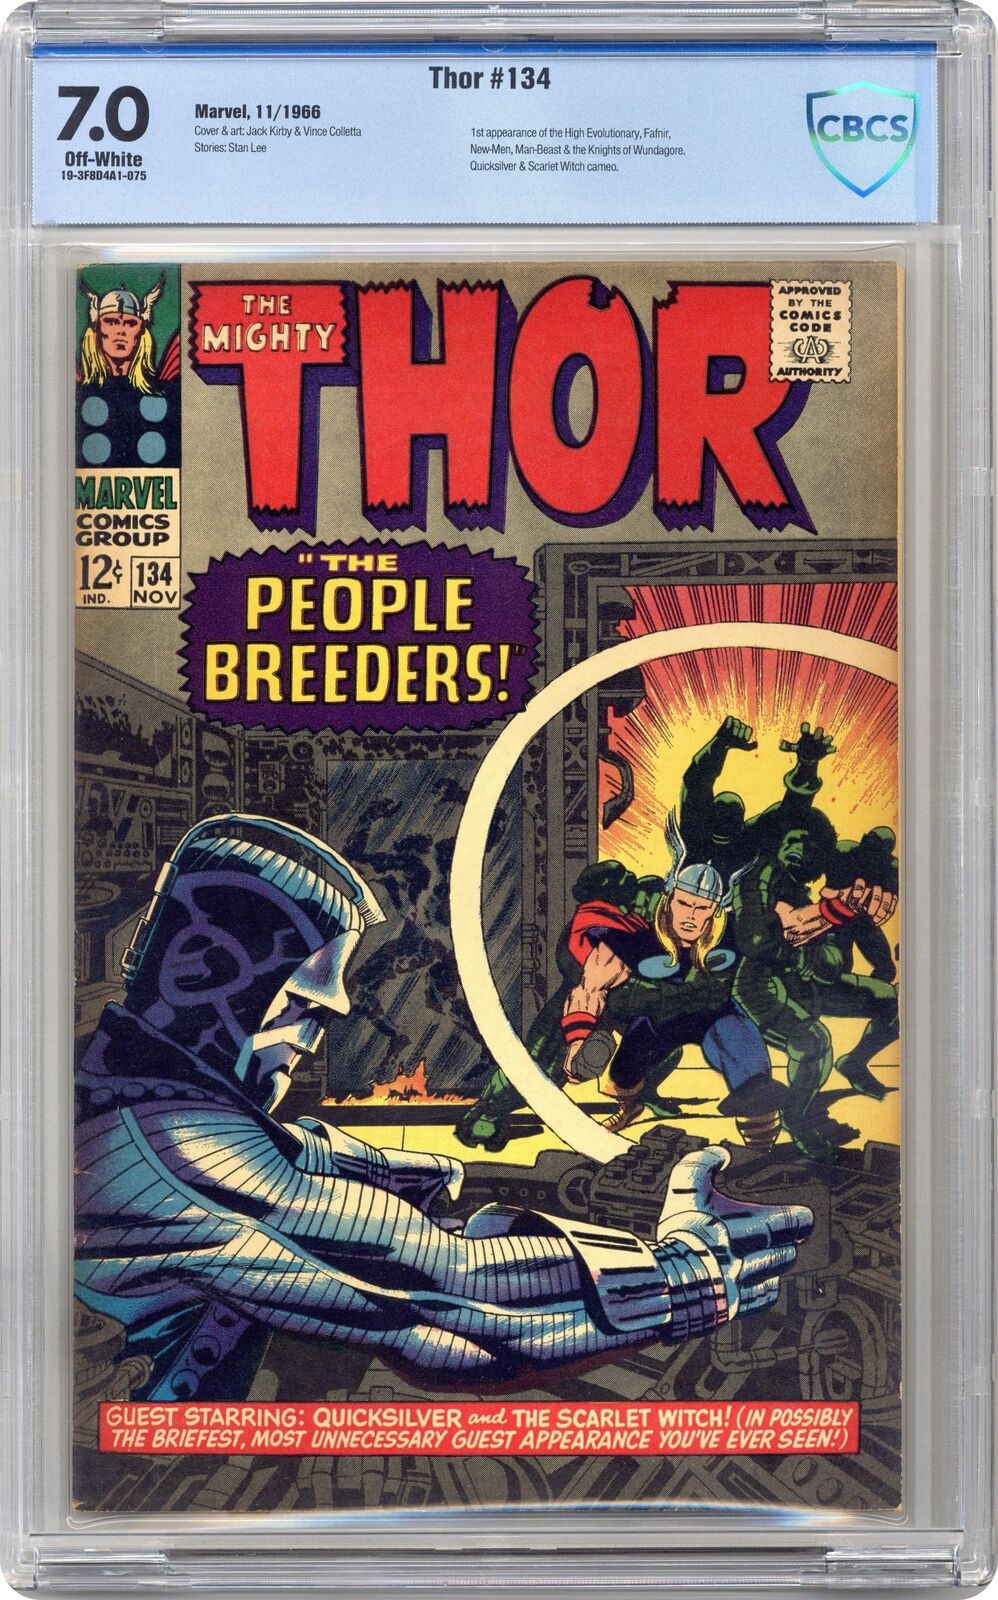 Thor #134 CBCS 7.0 1966 19-3F8D4A1-075 1st app. High Evolutionary, Man-Beast